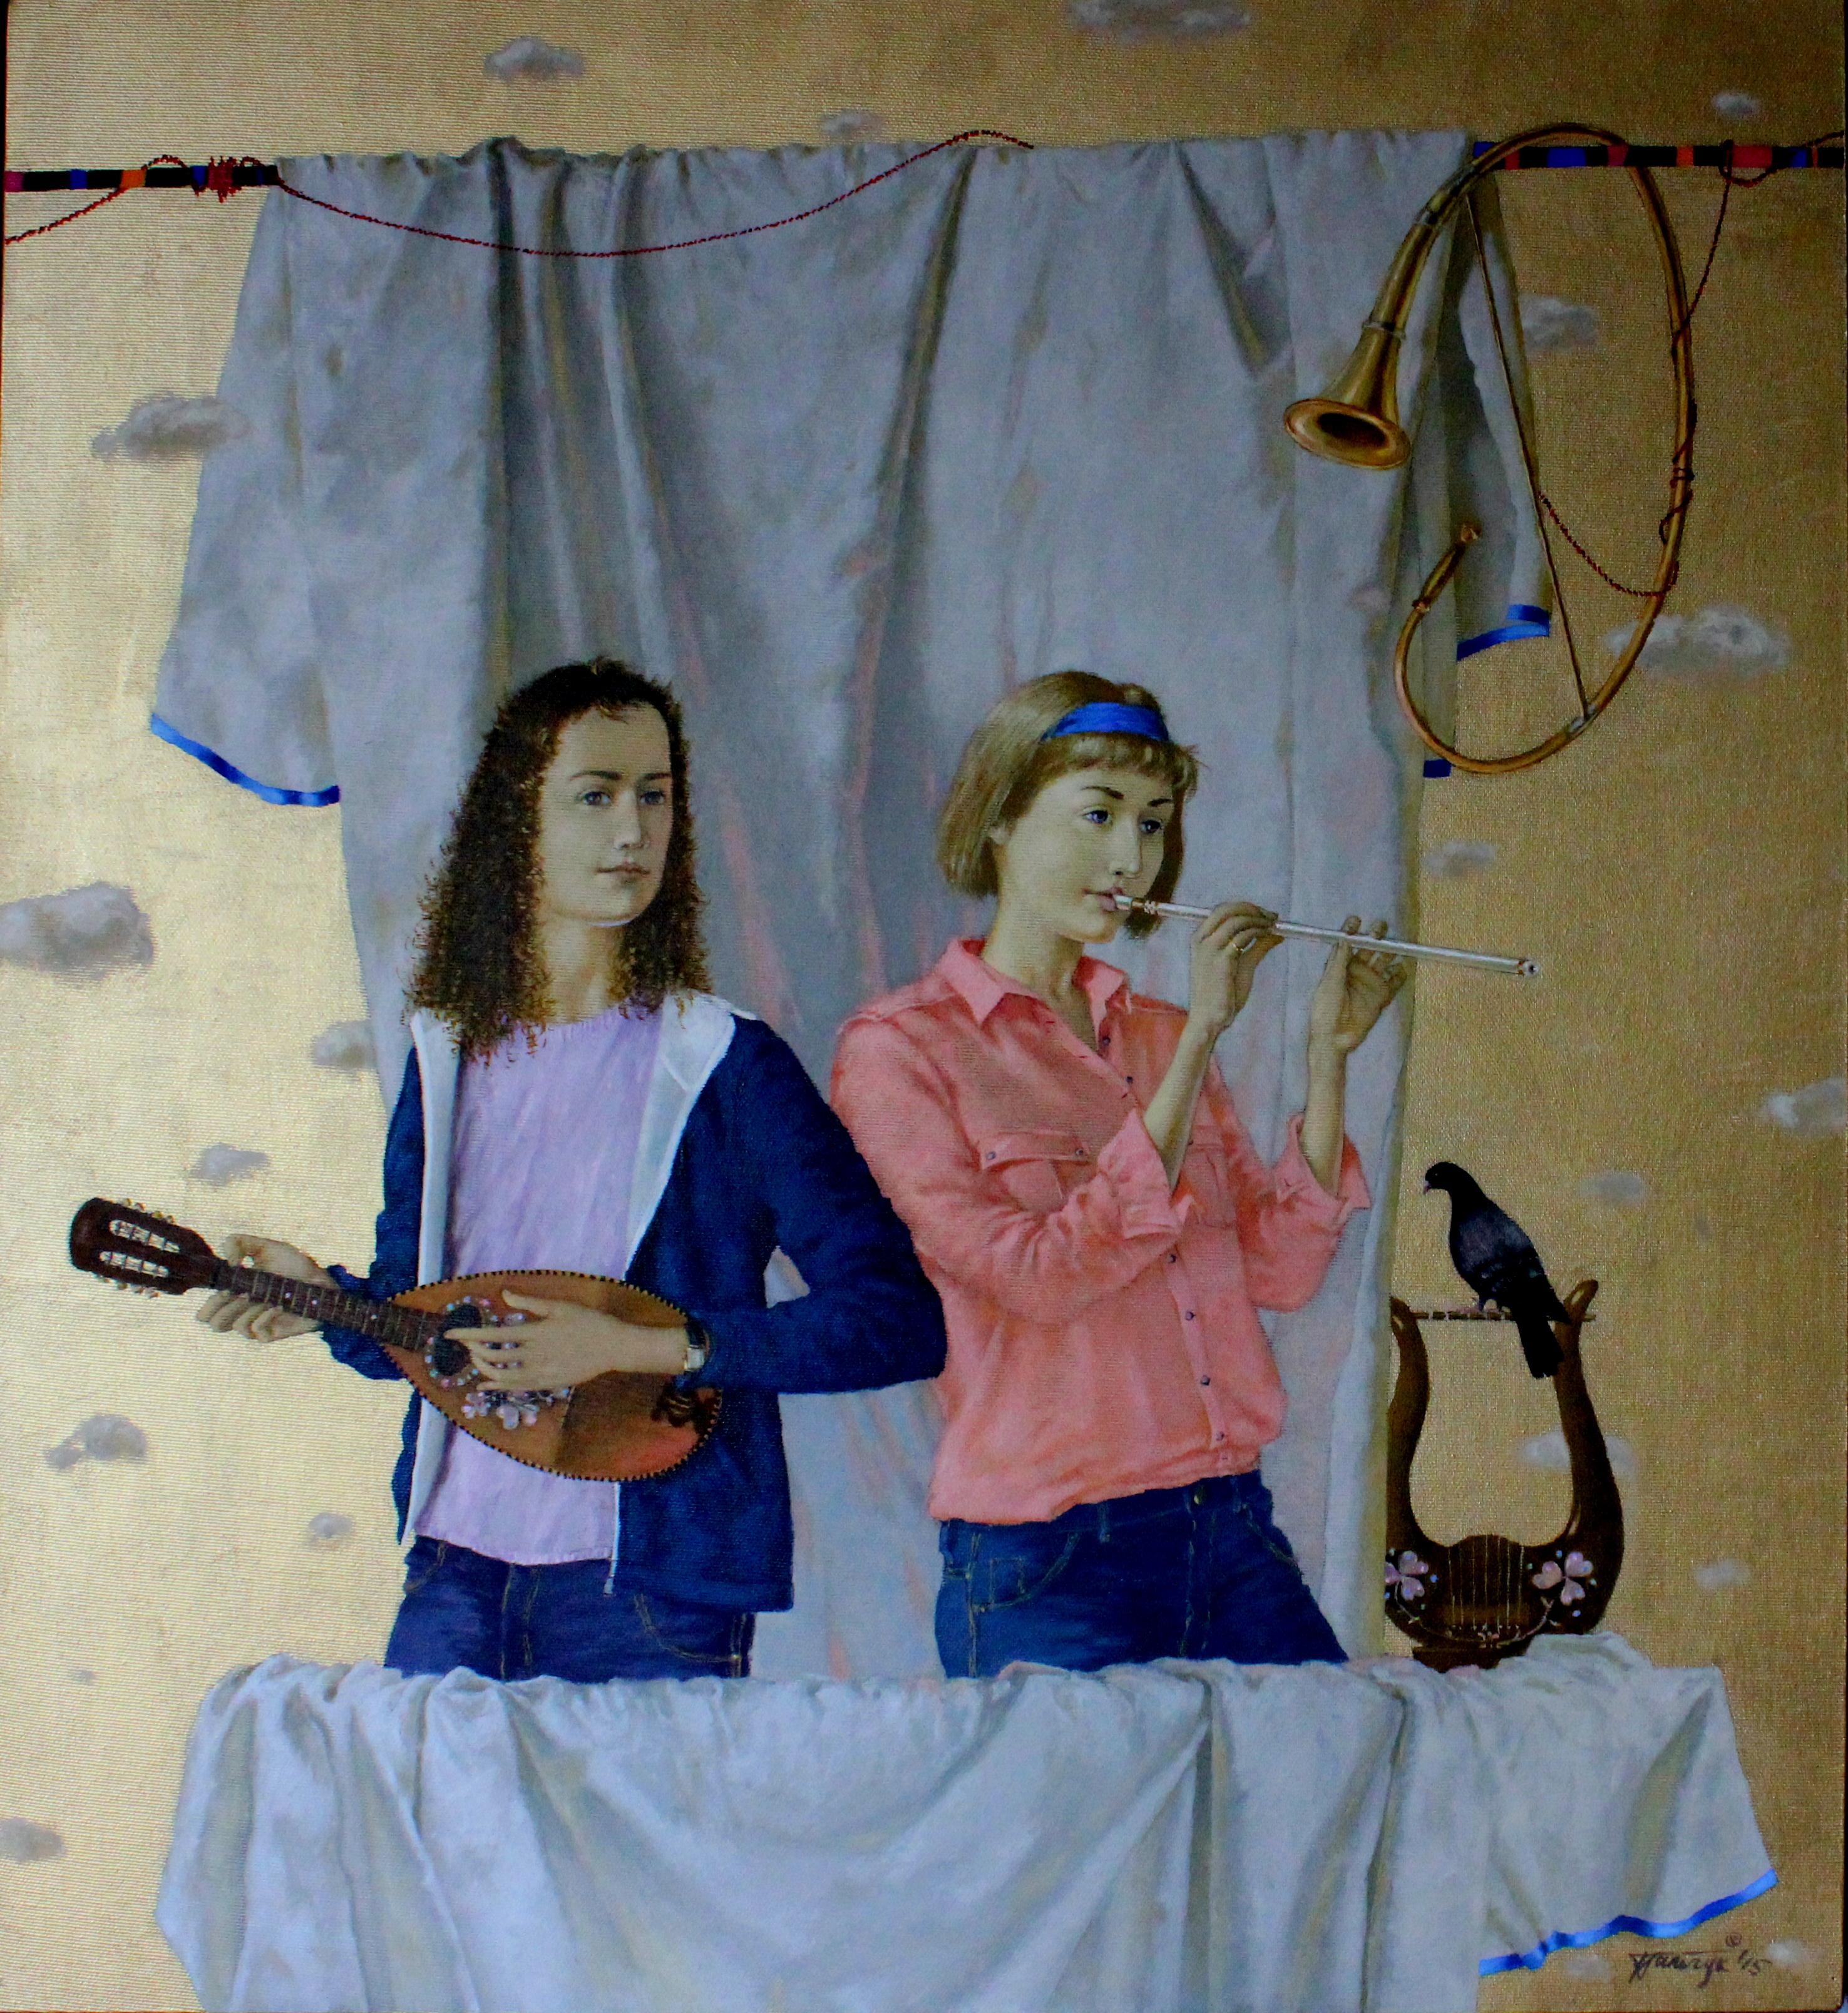 Tatyana Palchuk Figurative Painting - Flutist and Mandolin Player. 2016. Oil on canvas, 64x70 cm